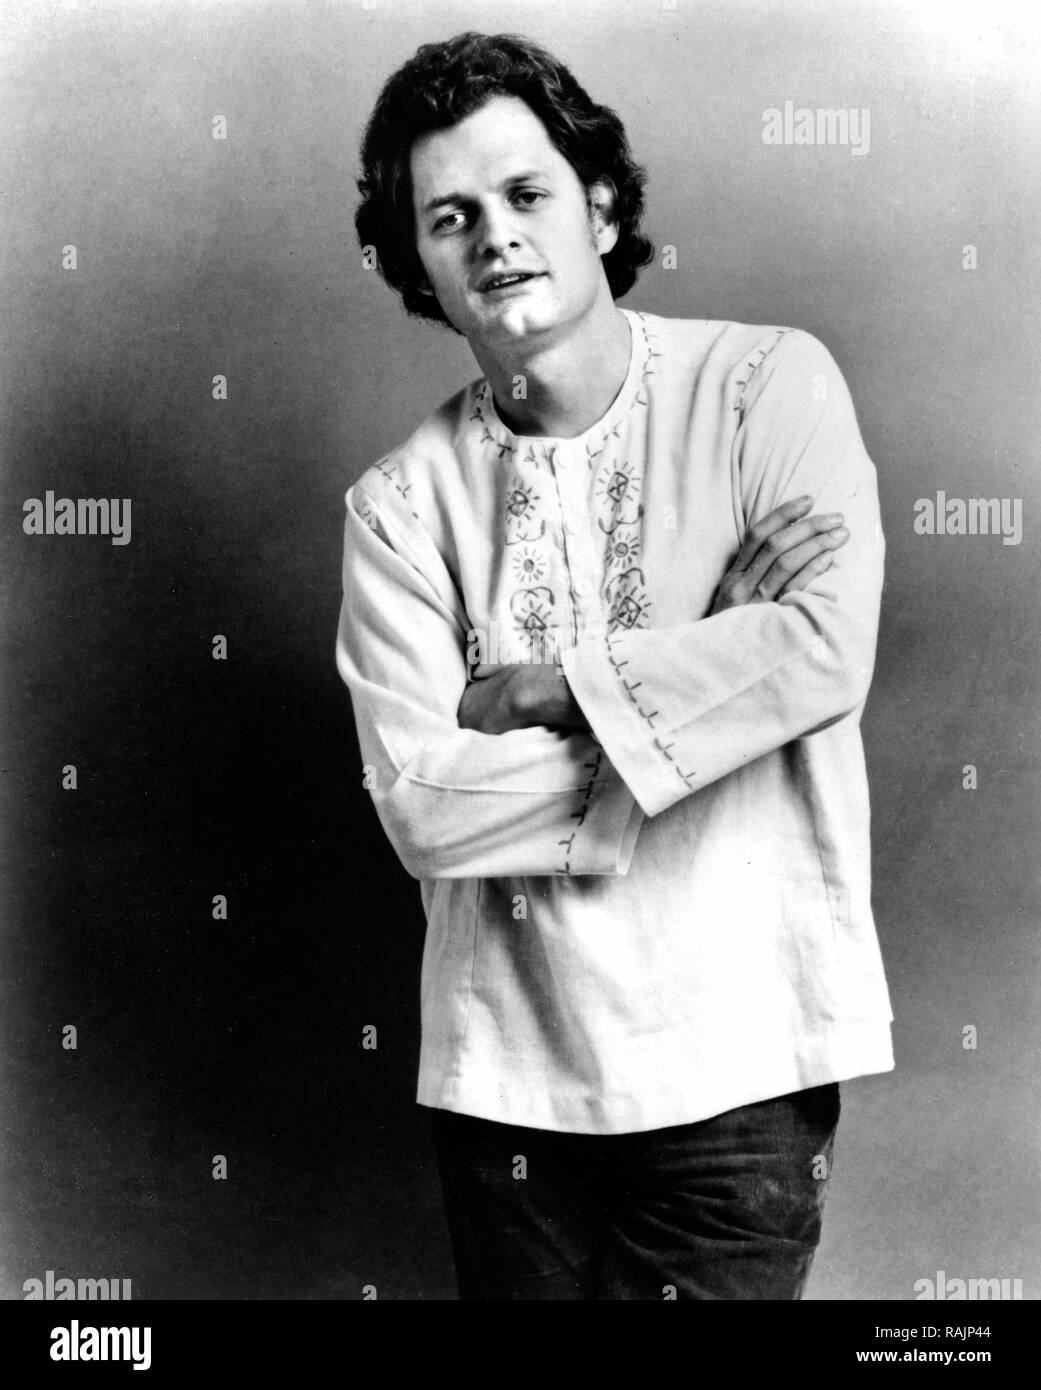 Foto publicitaria de Harry Chapin, circa 1973 Archivo de referencia # 33636 975tha Foto de stock